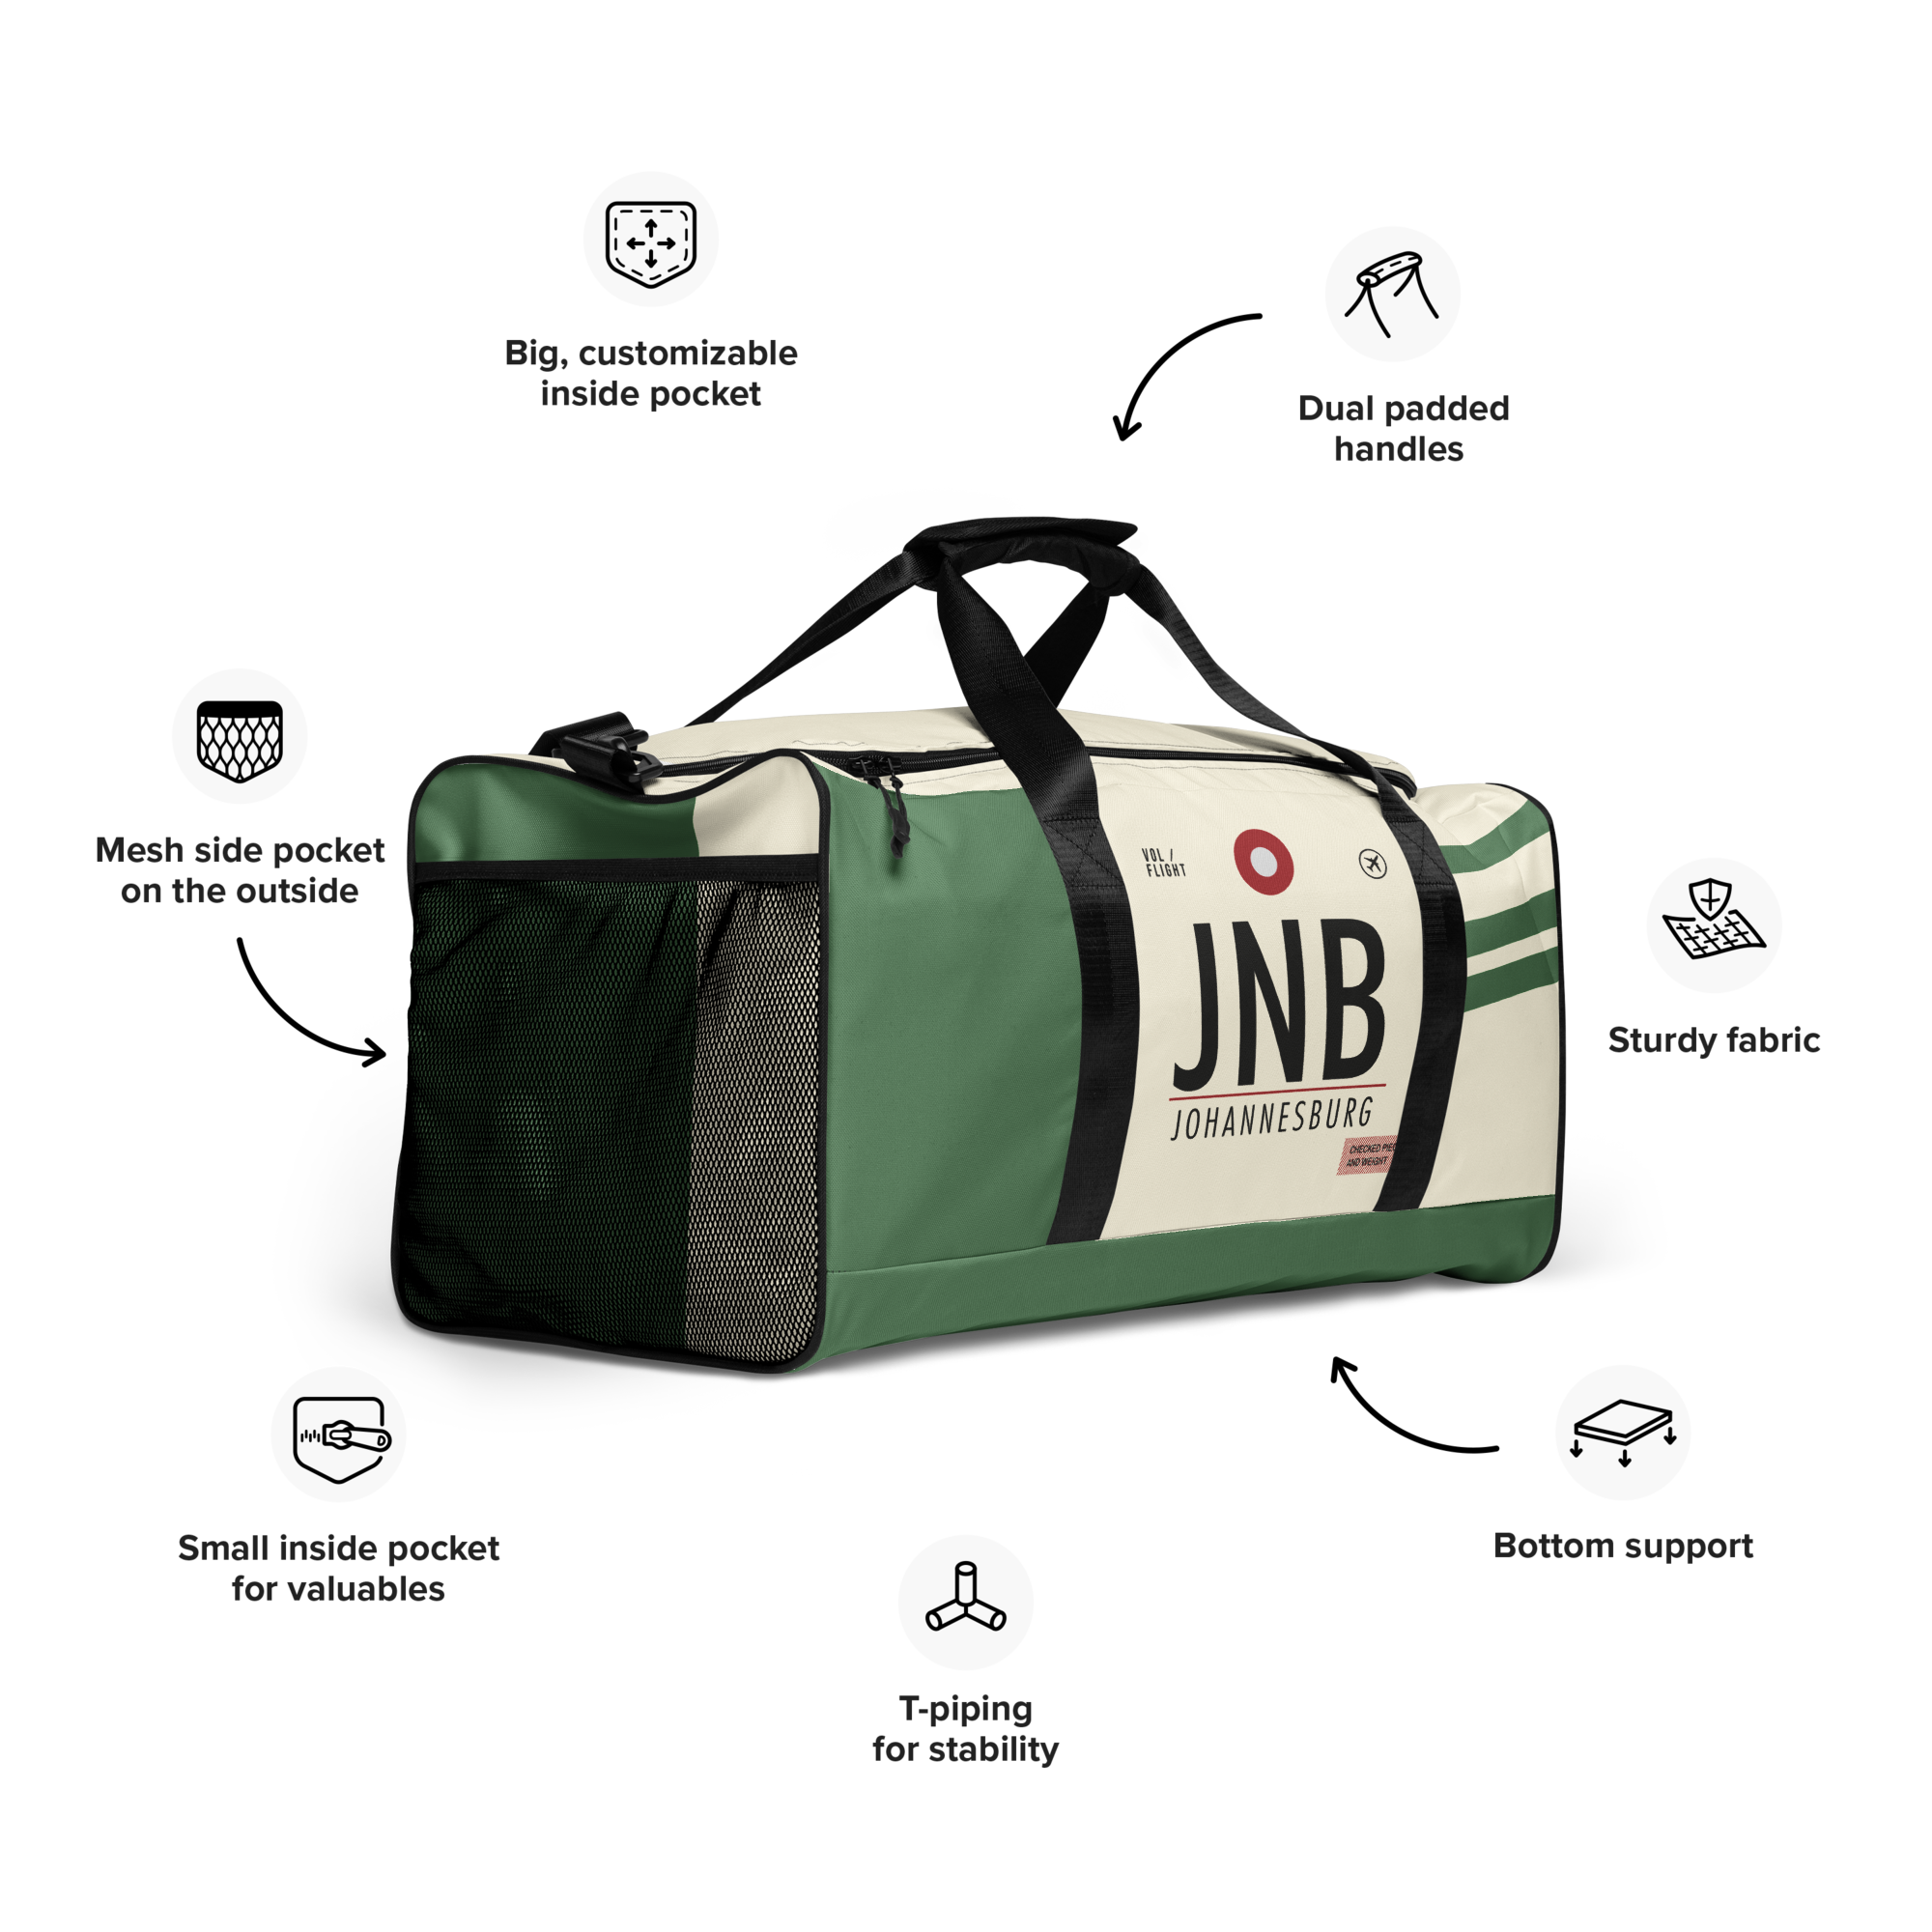 JNB - Johannesburg Weekender Bag Airport Code